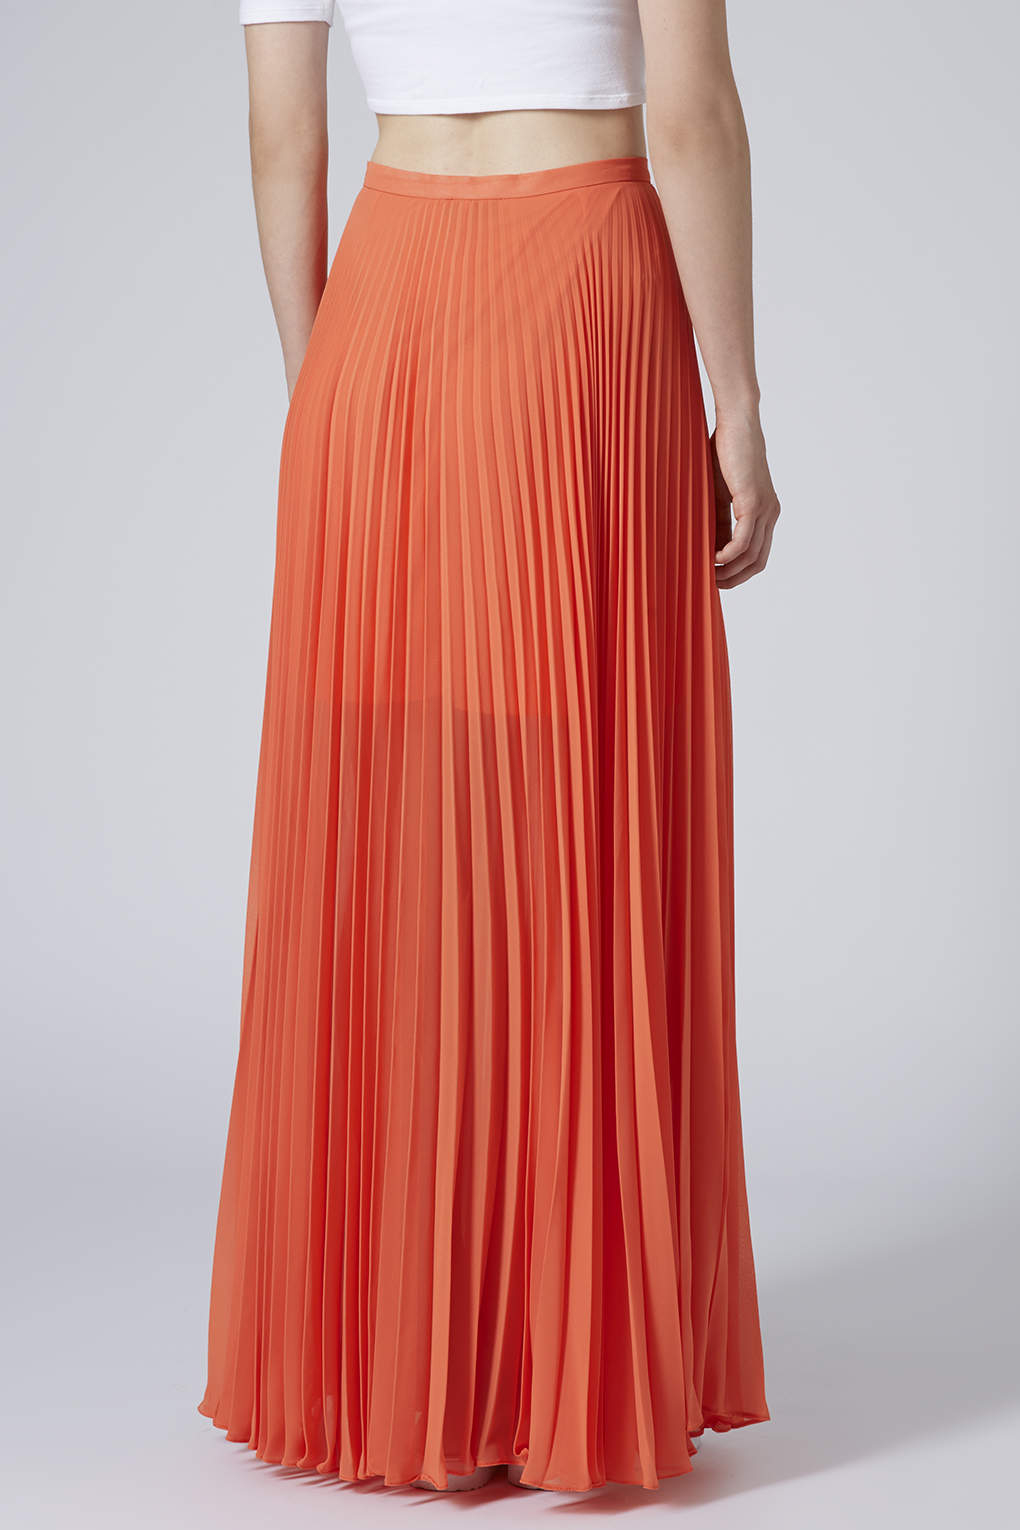 Lyst - Topshop Full Pleat Maxi Skirt in Orange